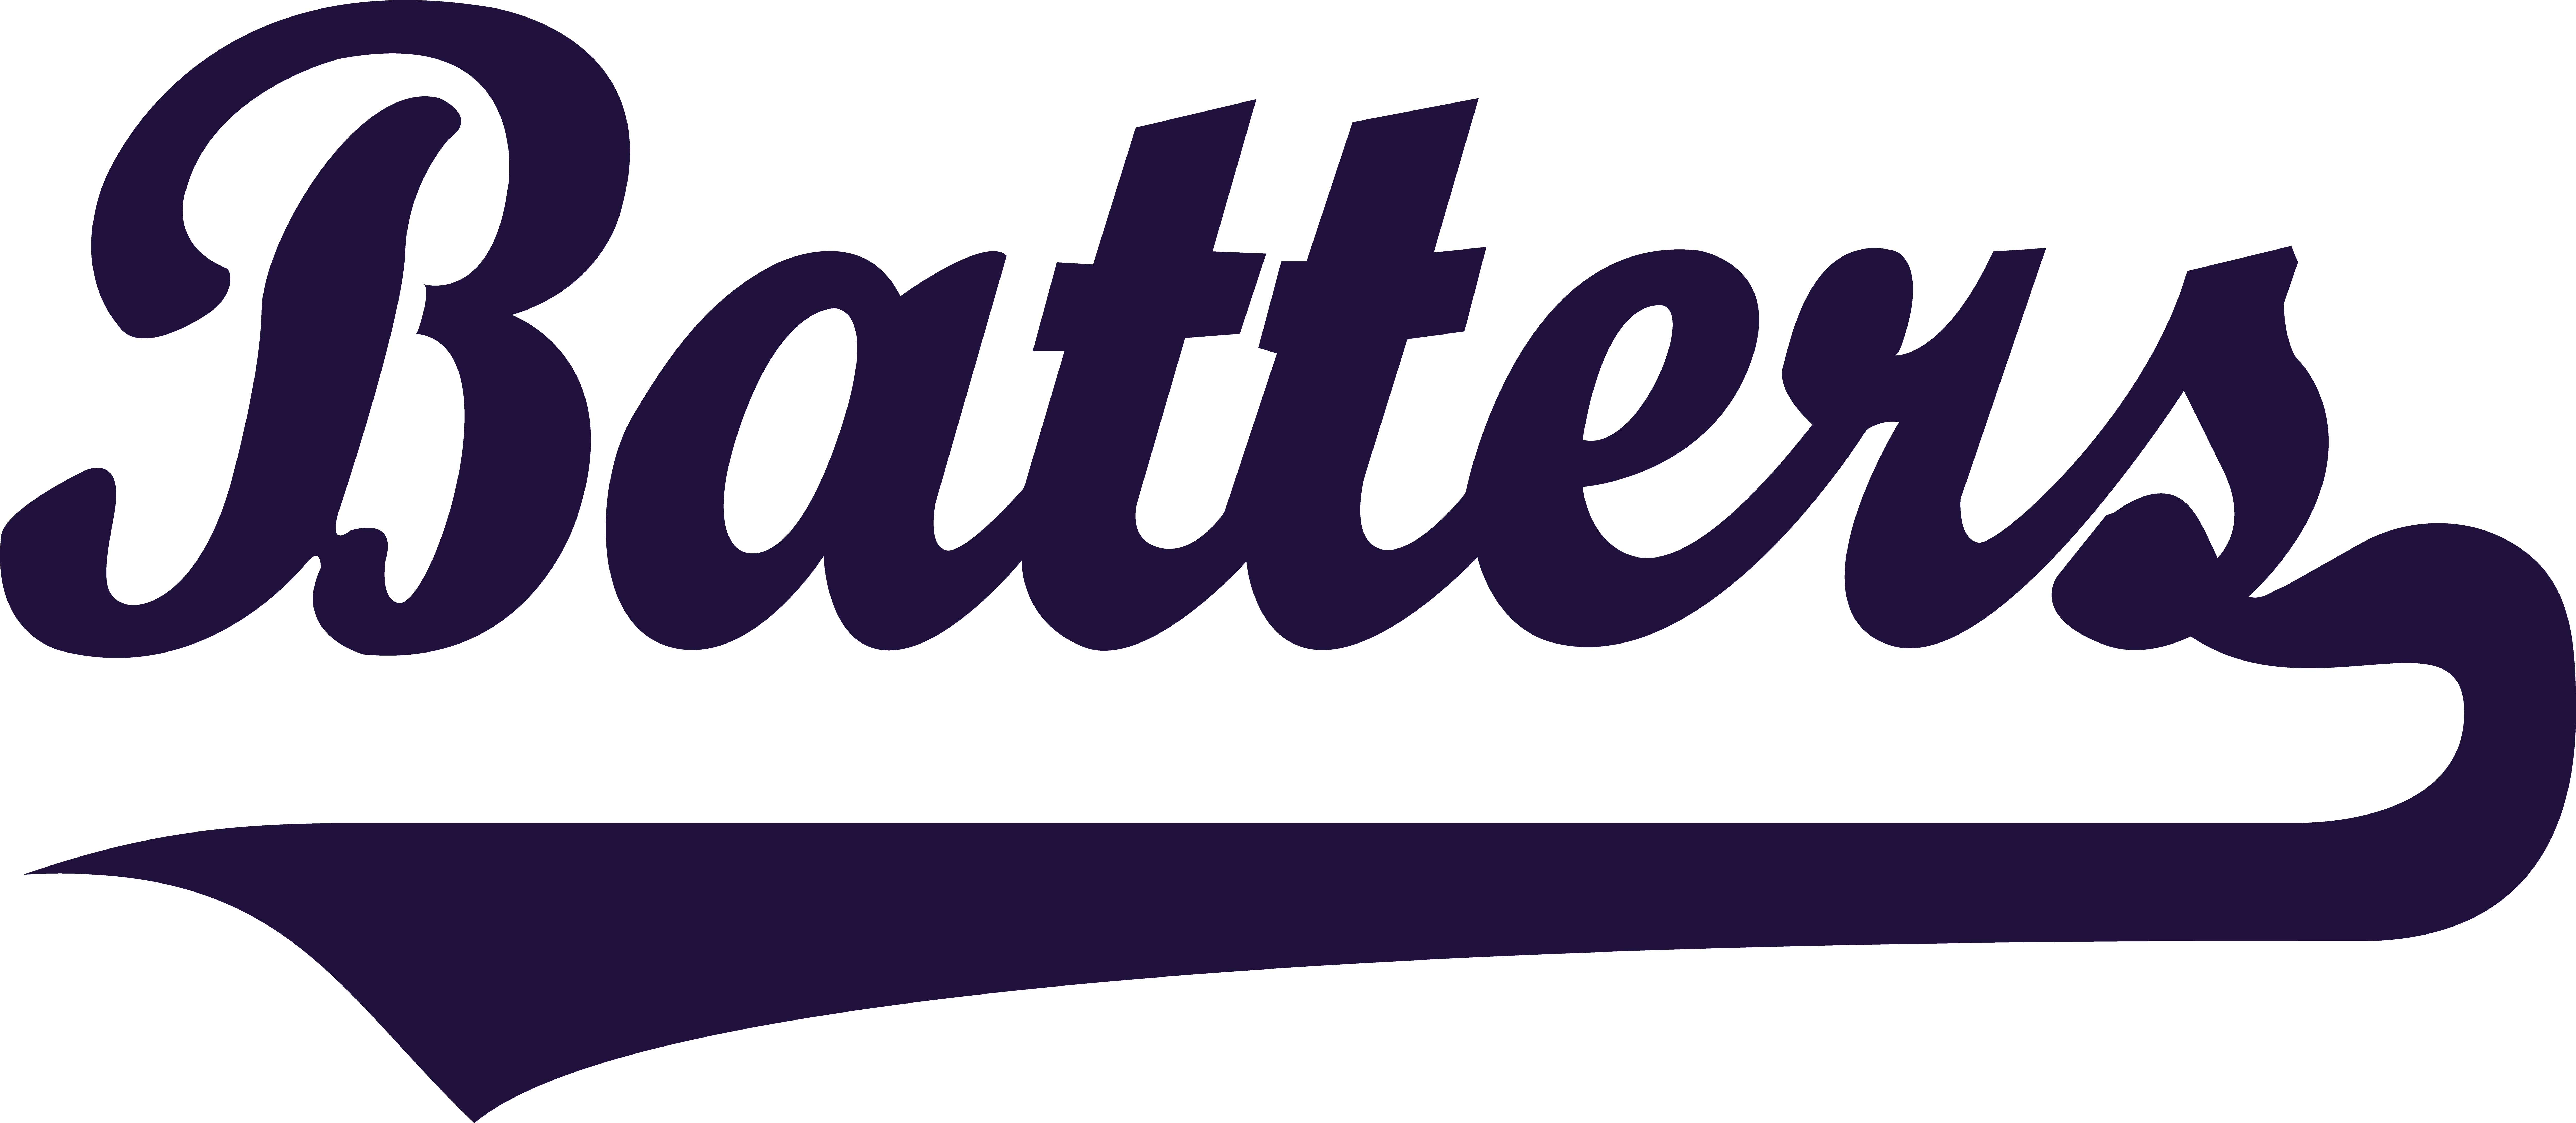 HSV Batters logo